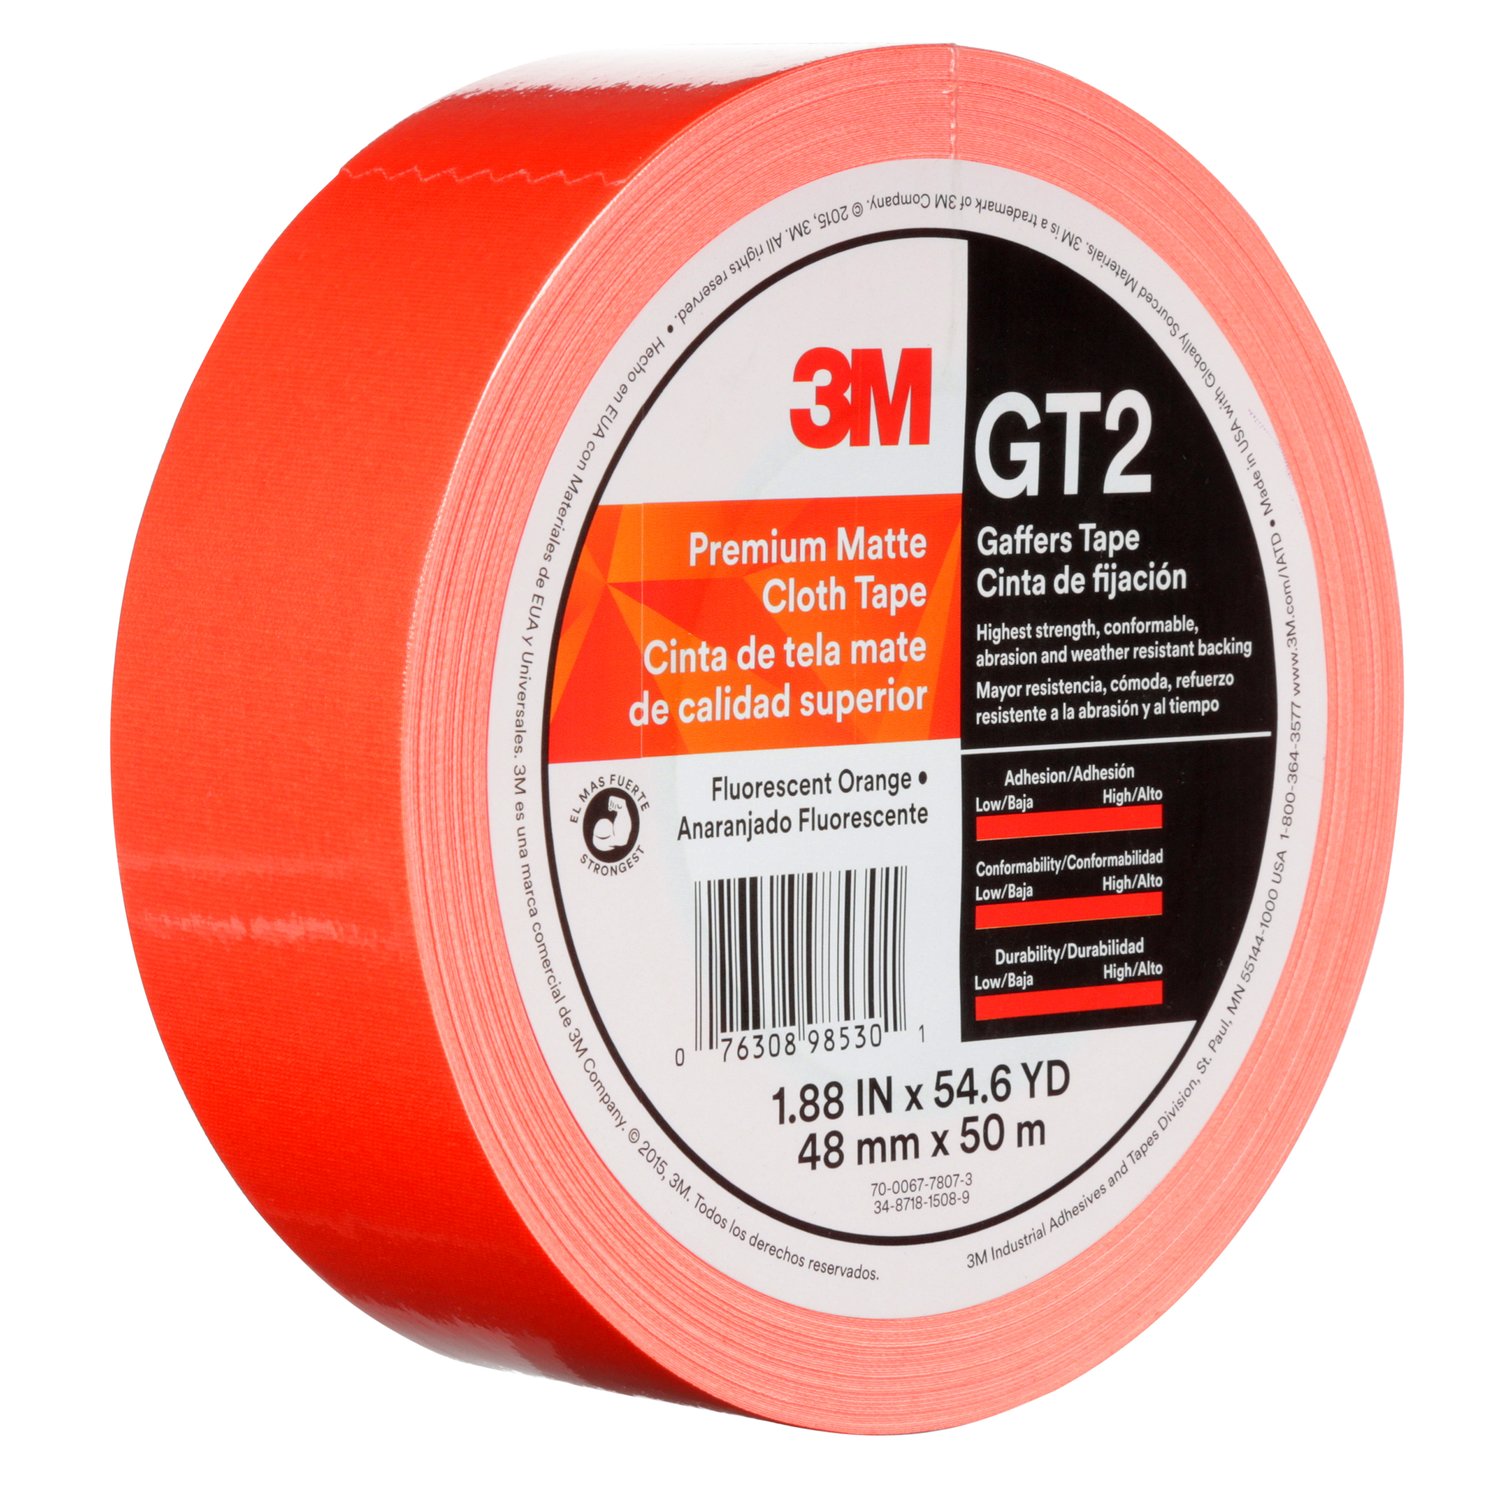 7010375521 - 3M Premium Matte Cloth (Gaffers) Tape GT2, Fluorescent Orange, 48 mm x
50 m, 11 mil, 24/Case